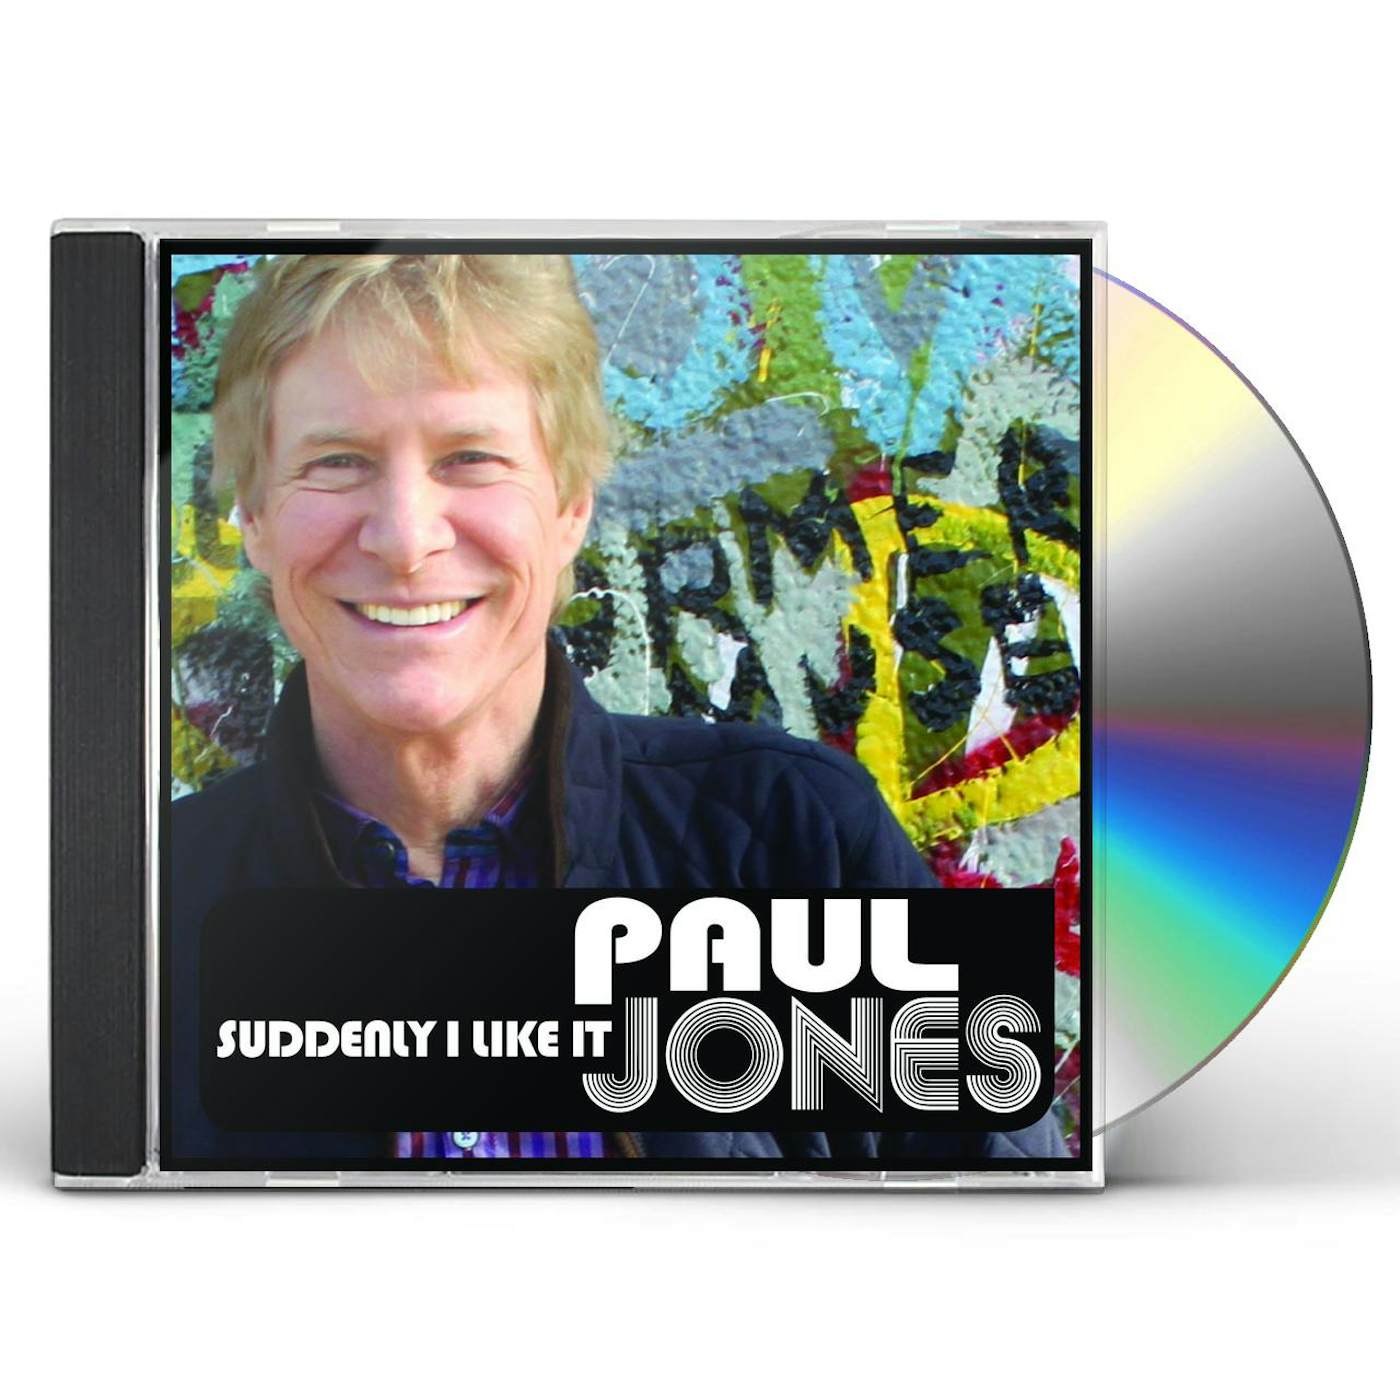 Paul Jones SUDDENLY I LIKE IT CD